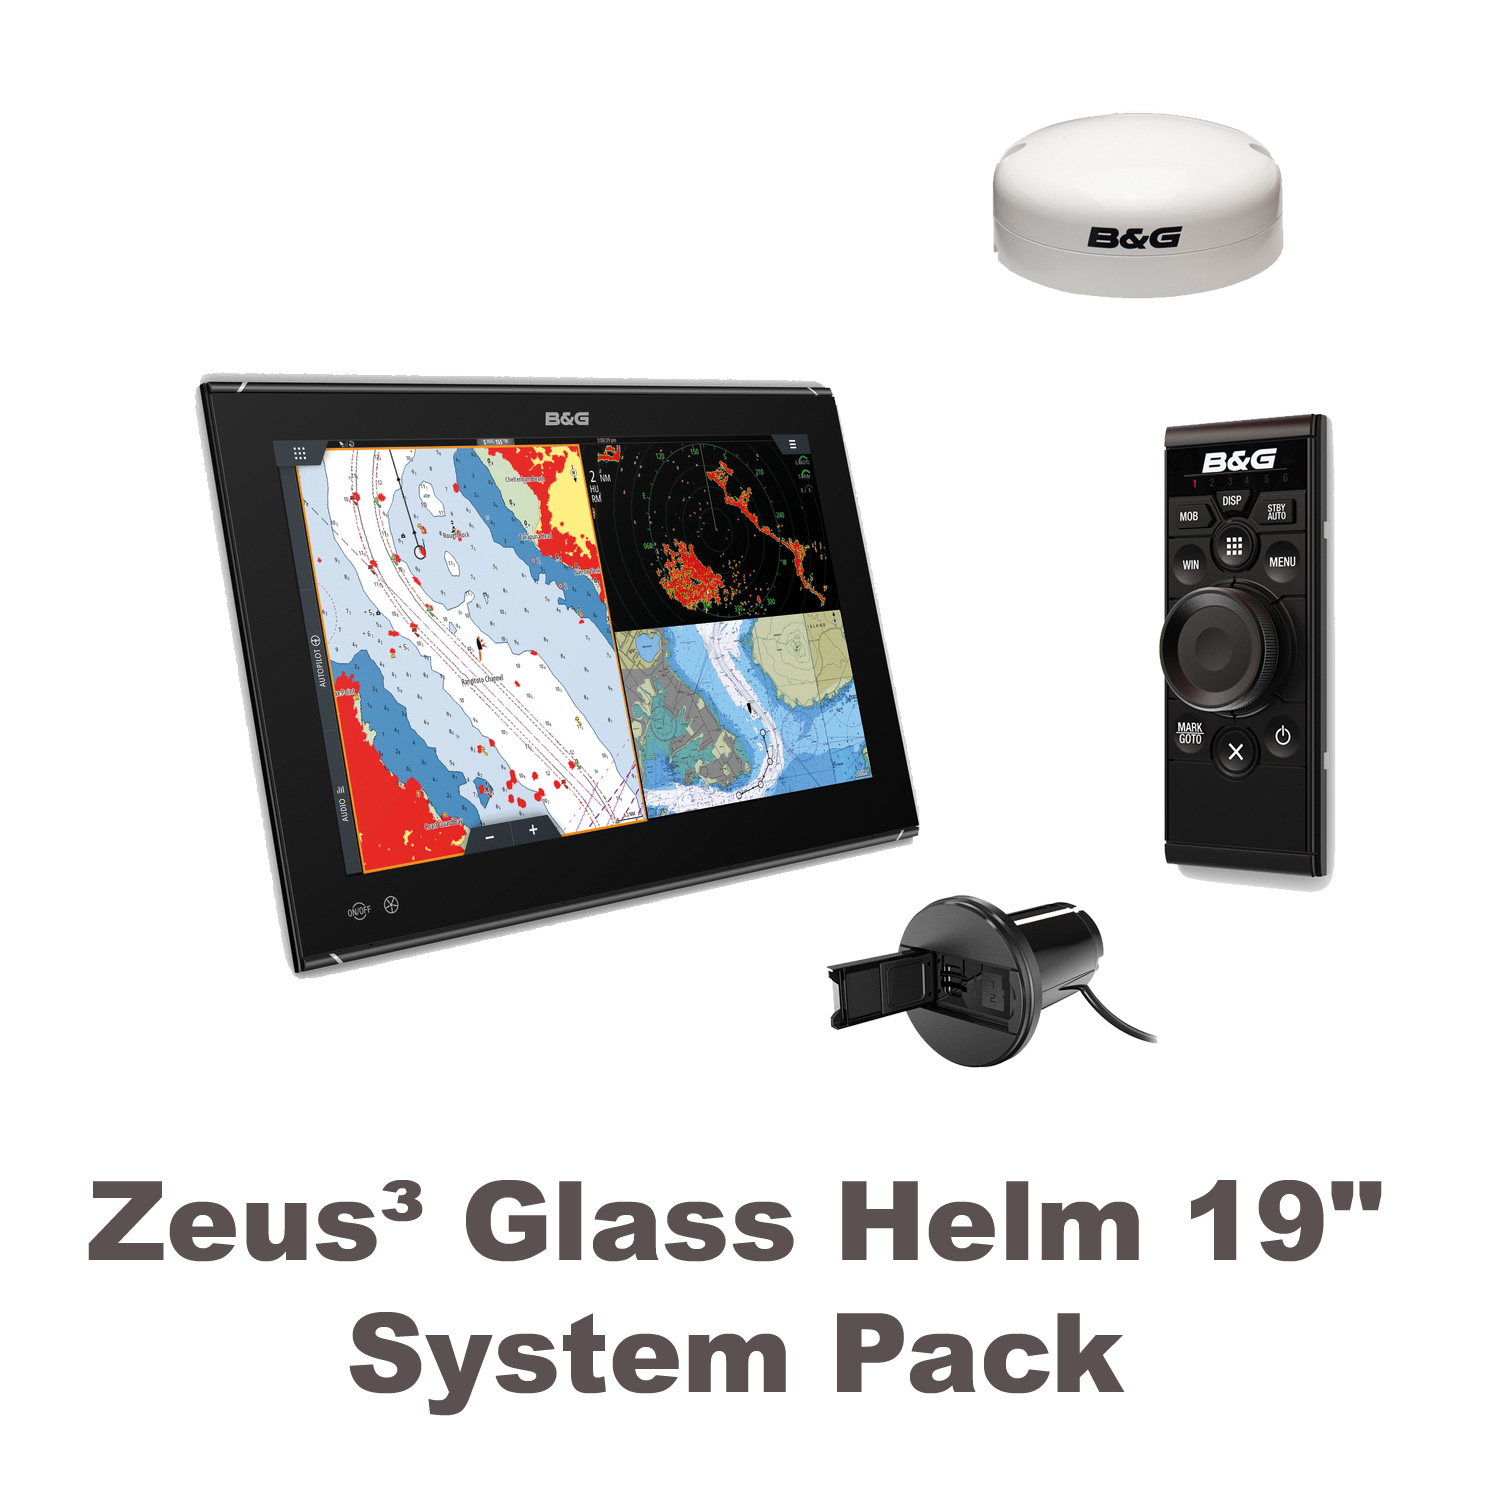 B&G Zeus3 Glass Helm 19" System Paket